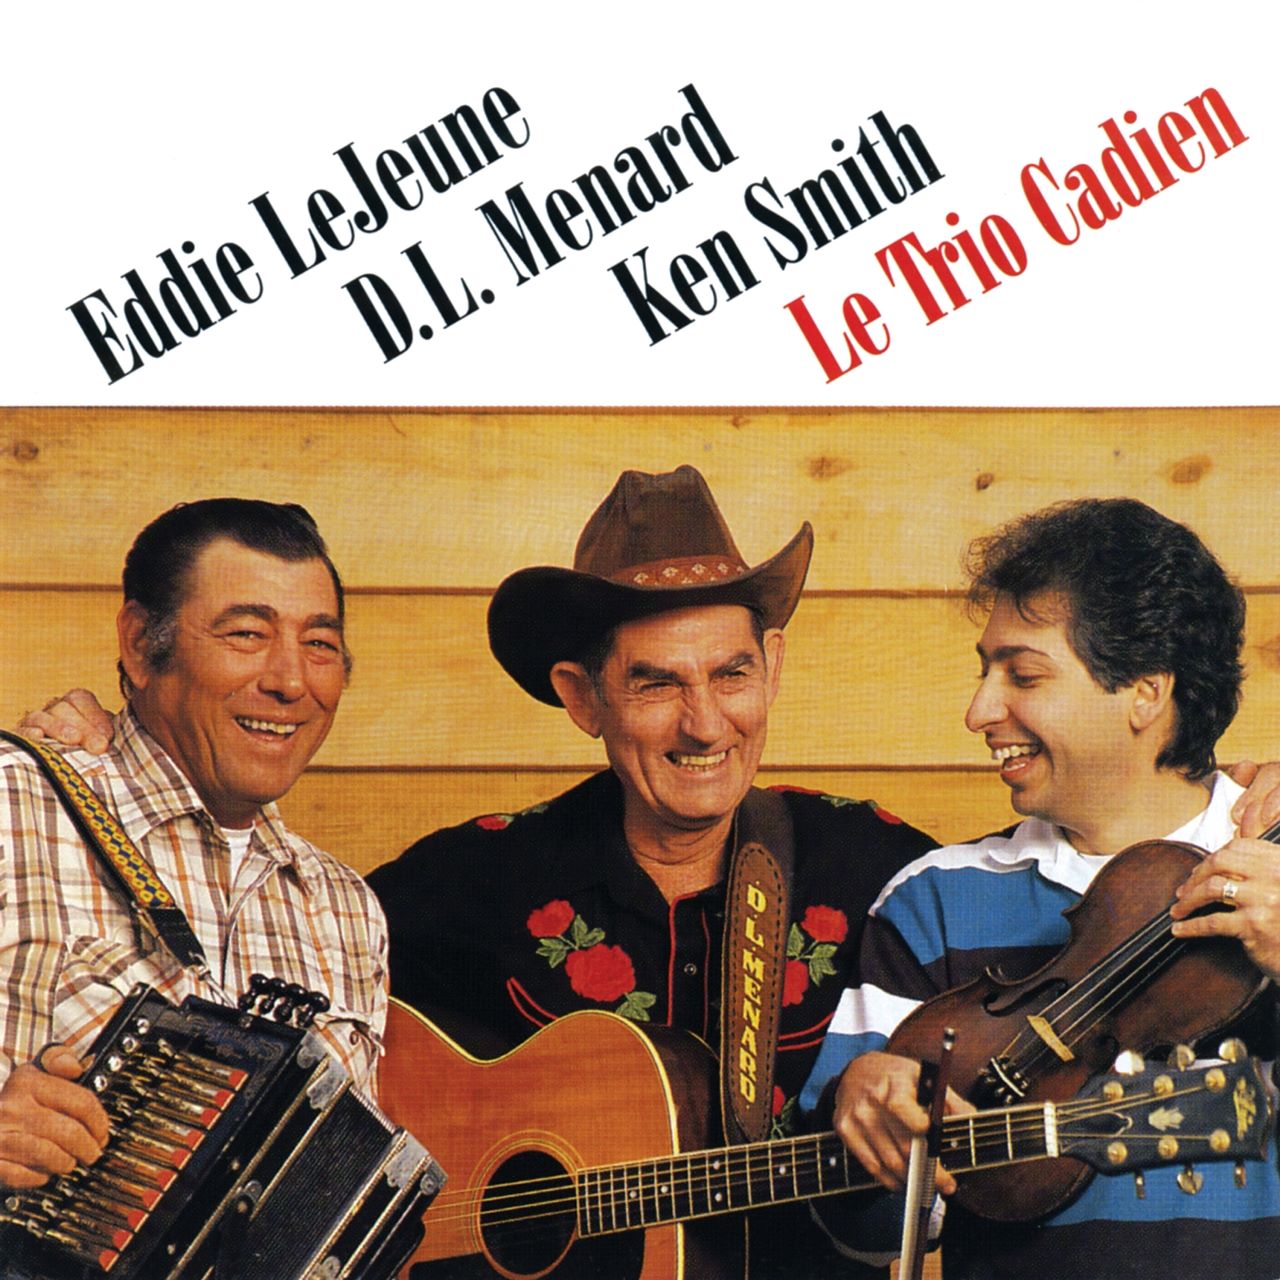 Eddie LeJeune, D.L. Menard & Ken Smith – Le Trio Cadien cover album